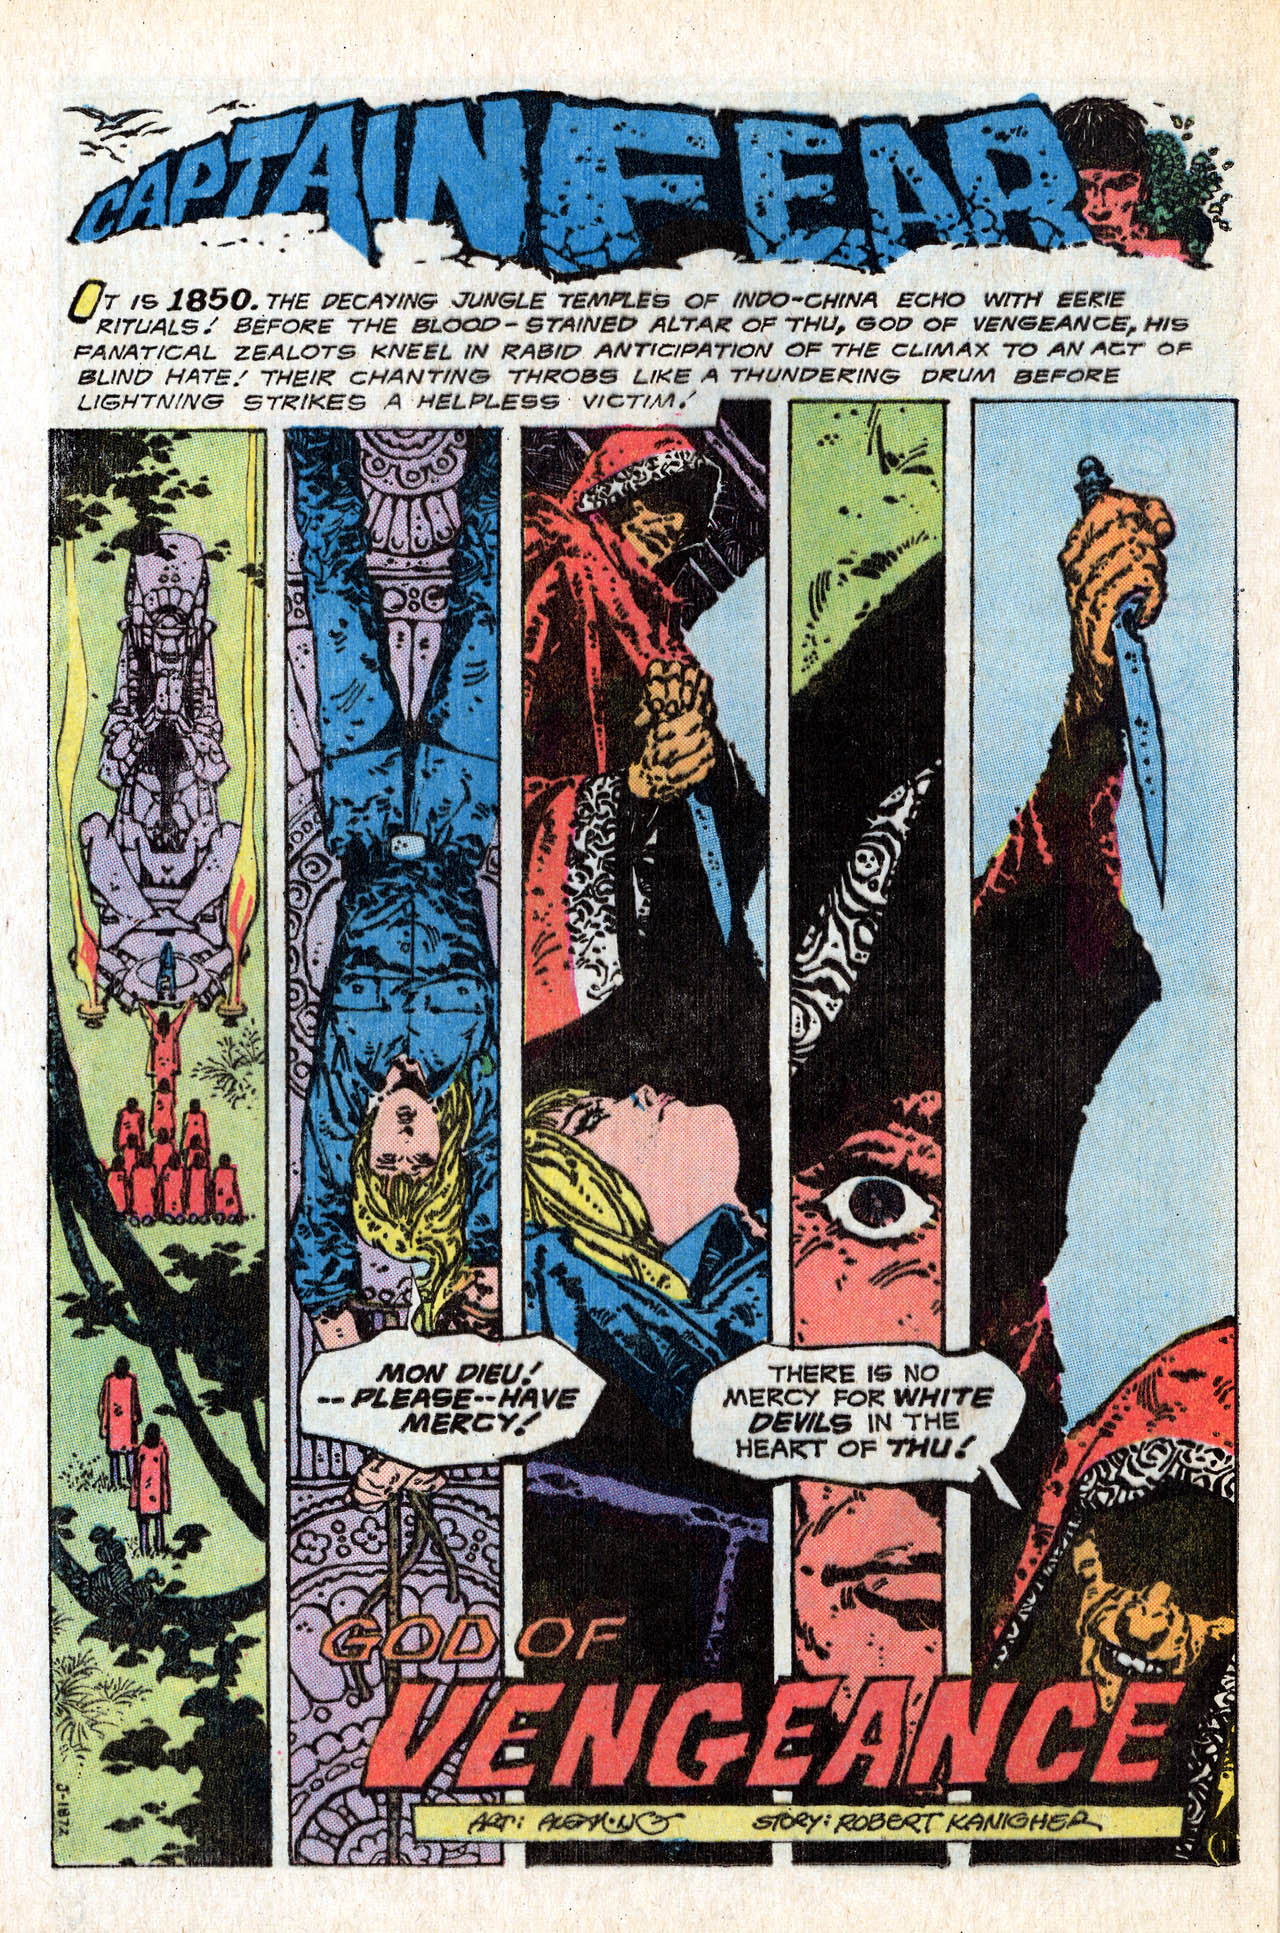 Adventure Comics #426 (1973) by Robert Kanigher and Alex Nino